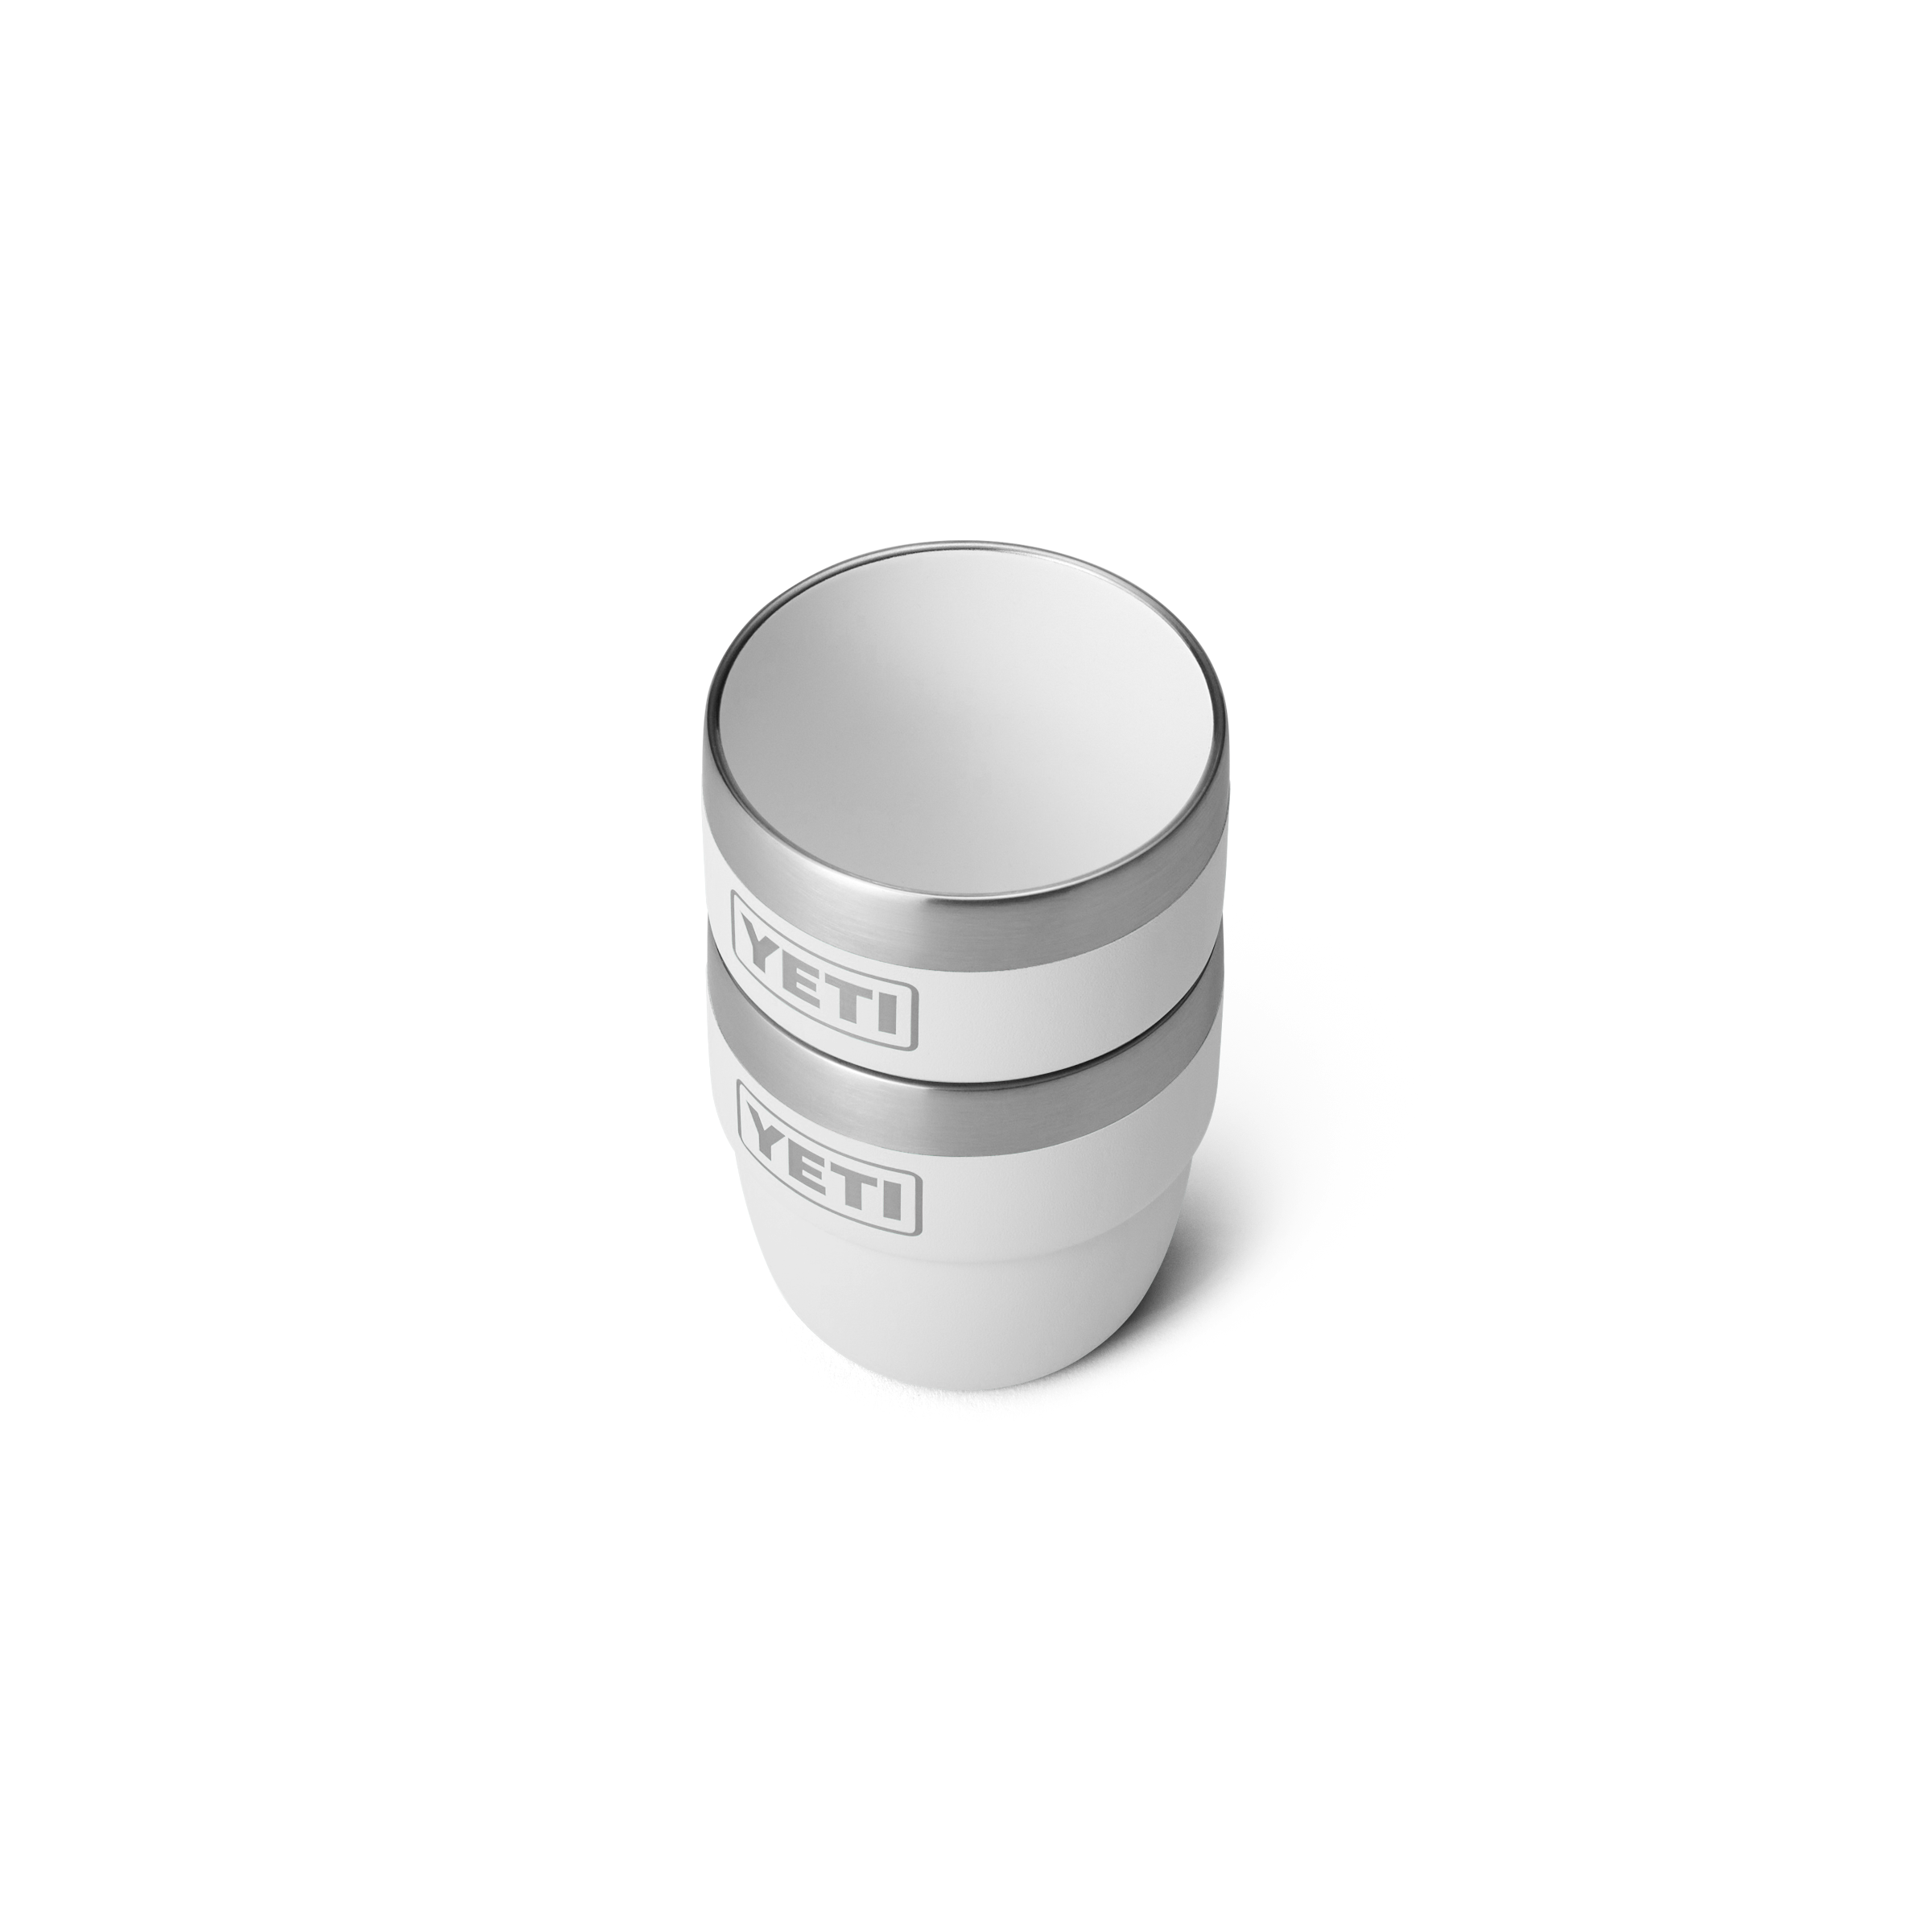 YETI Rambler® 4 oz (118 ml) Stackable Cups White